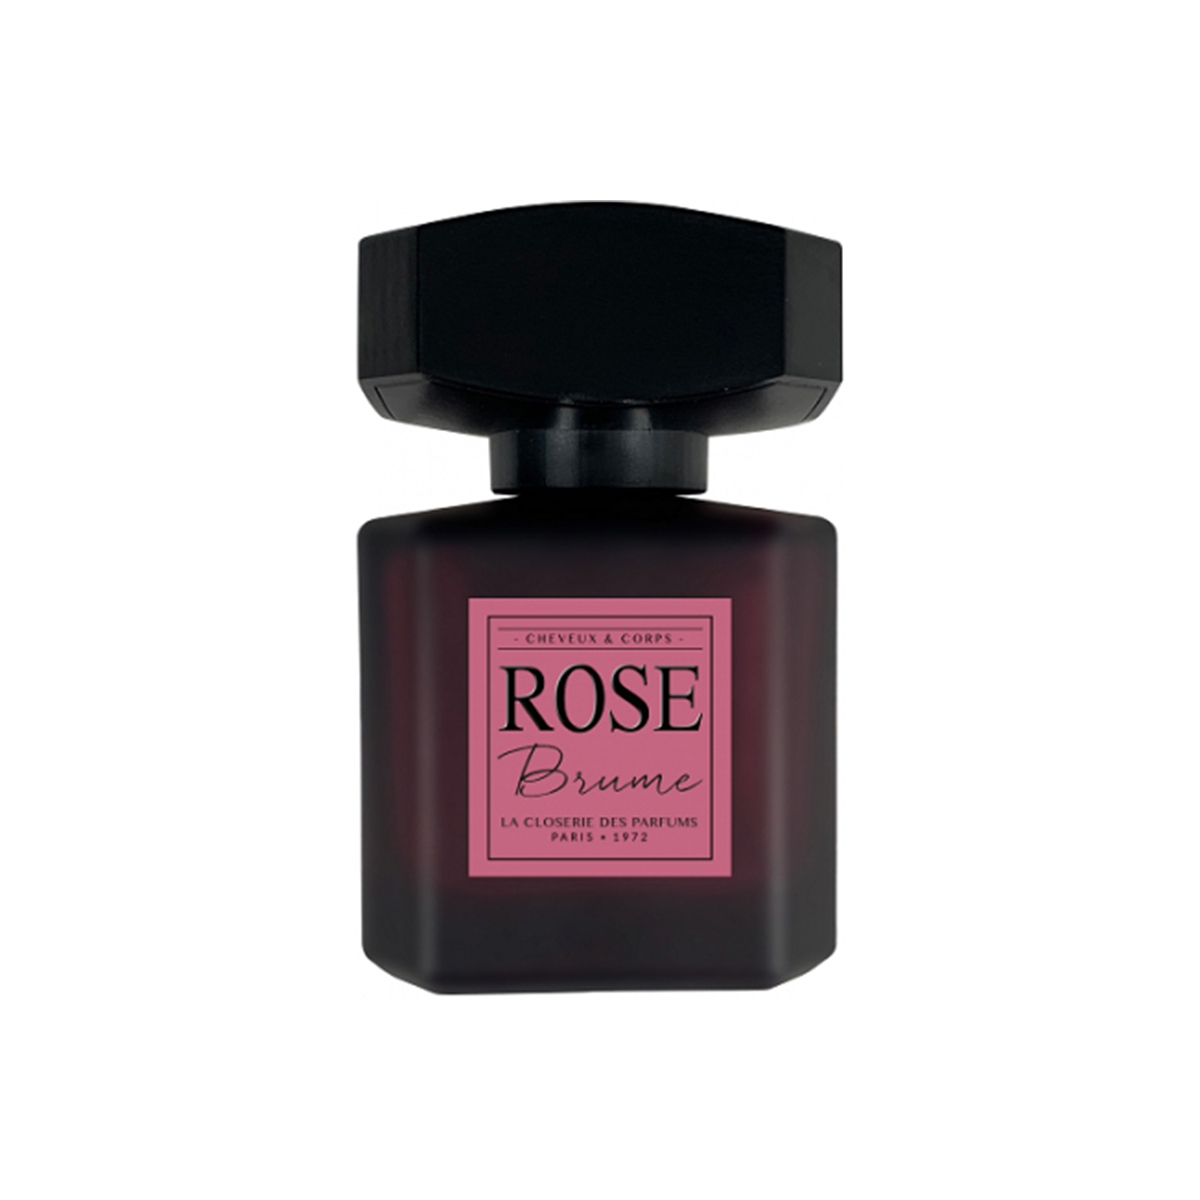 Rose Brume La Closerie des Perfumes Perfumes, Profumo Per Capelli, Arada Perfumes